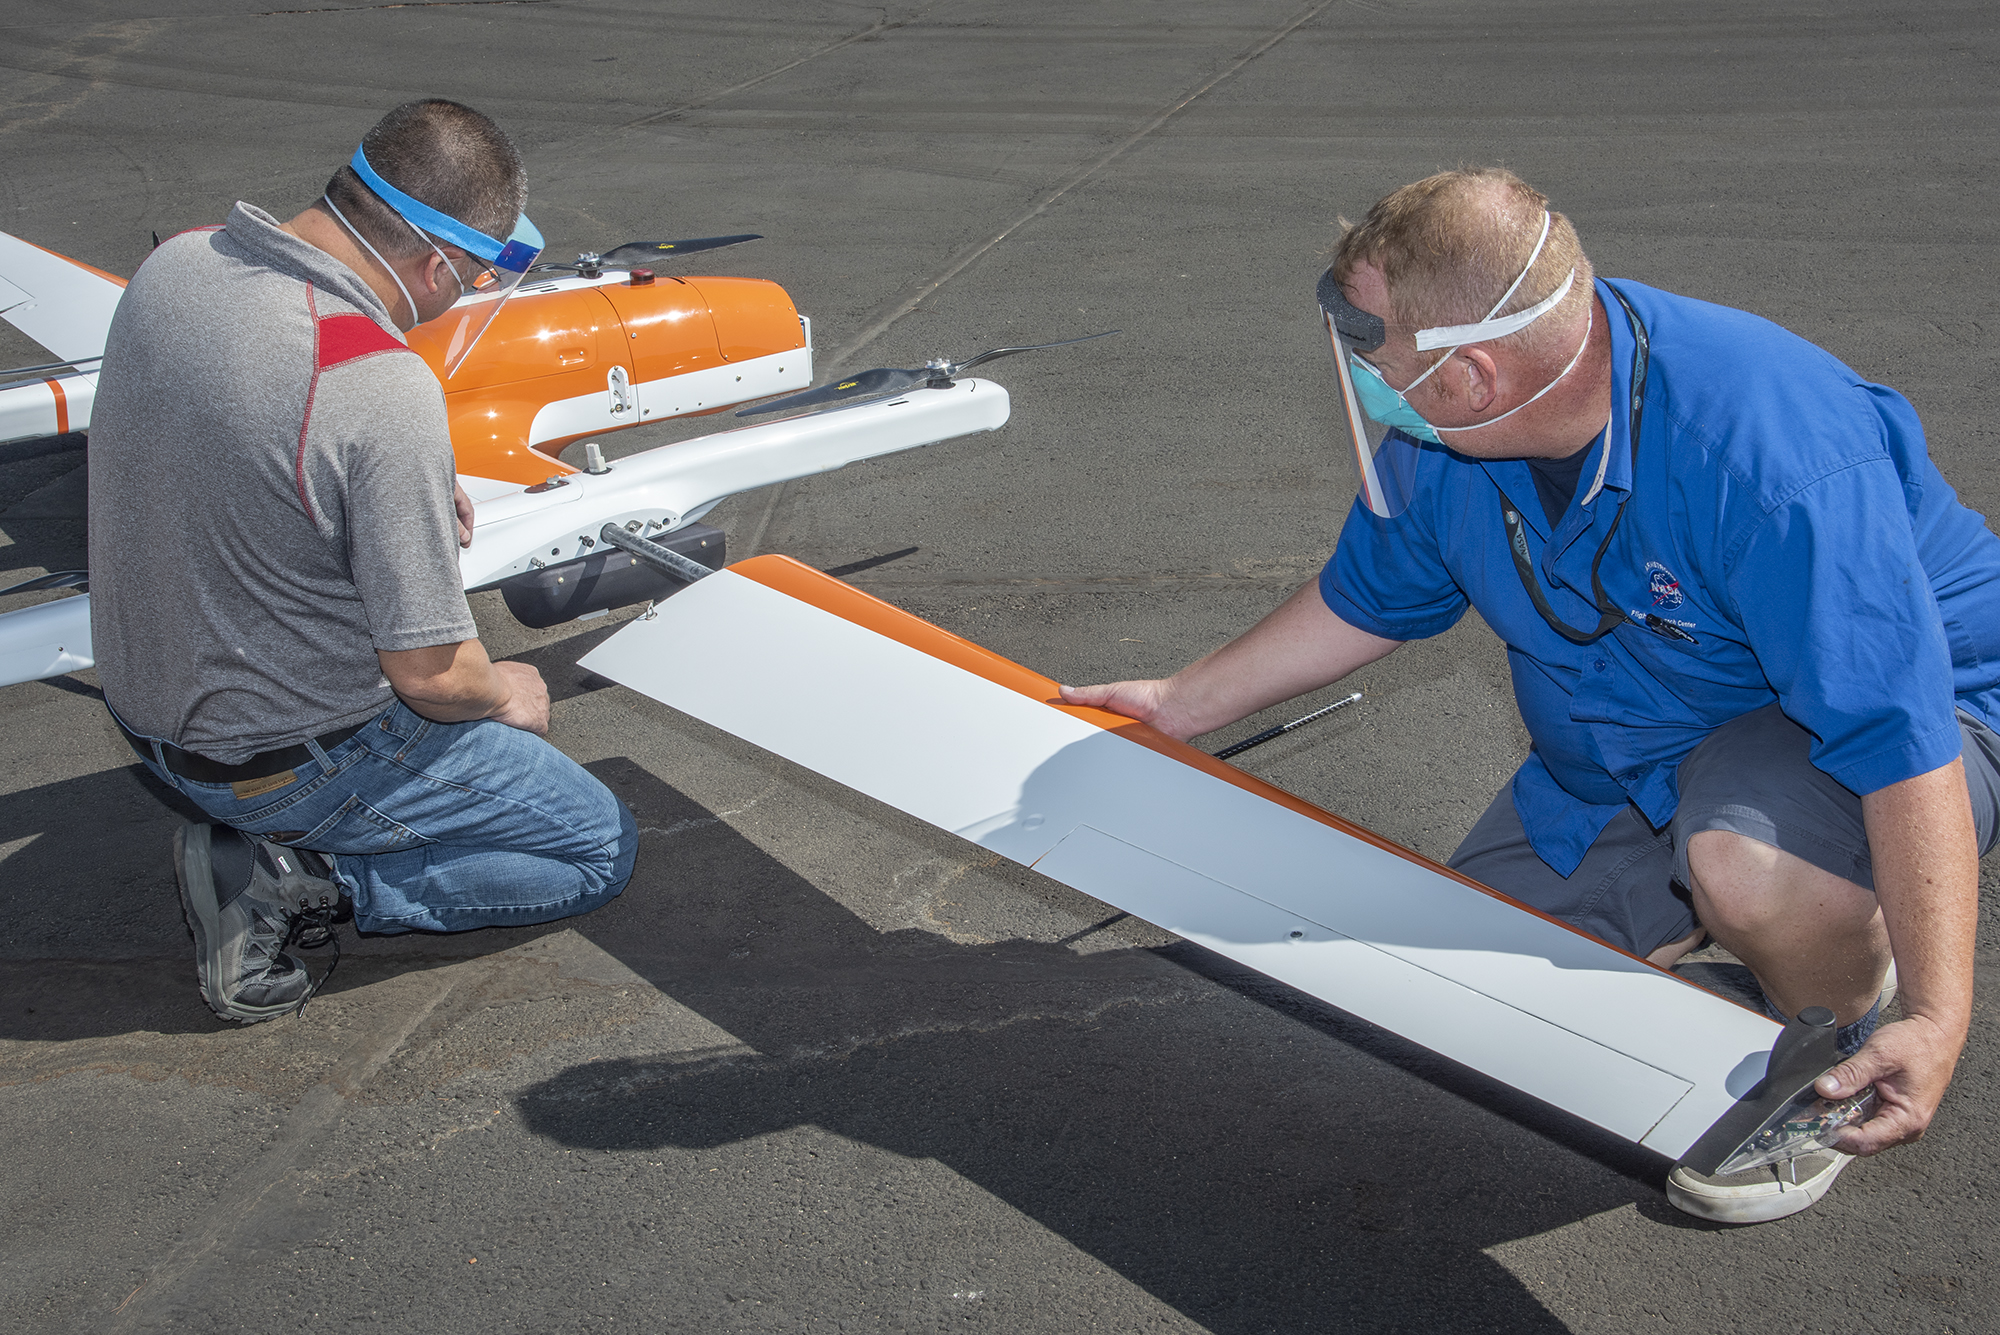 Derek Abramson and Robert Jensen install a wing on the Hybrid Quadrotor 90C (HQ-90).